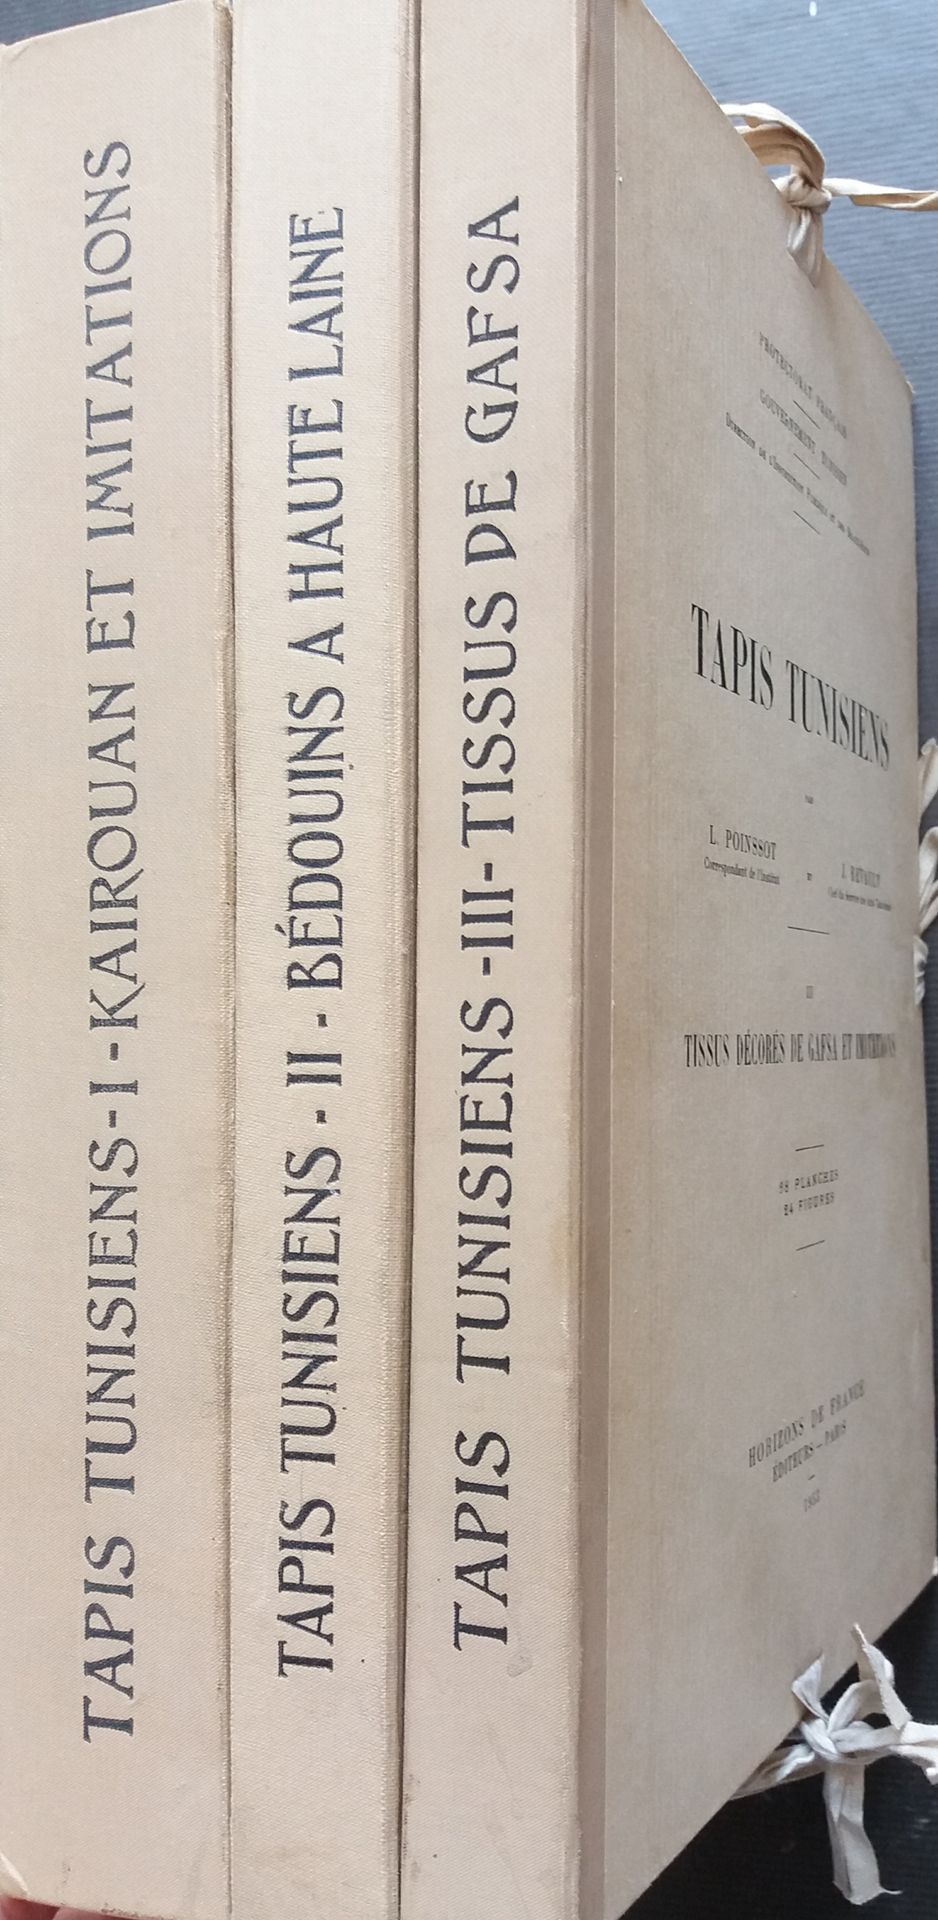 Null [TAPIS]
1 ouvrage en 3 tomes sur les tapis tunisiens.

*Tapis Tunisiens.
Pa&hellip;